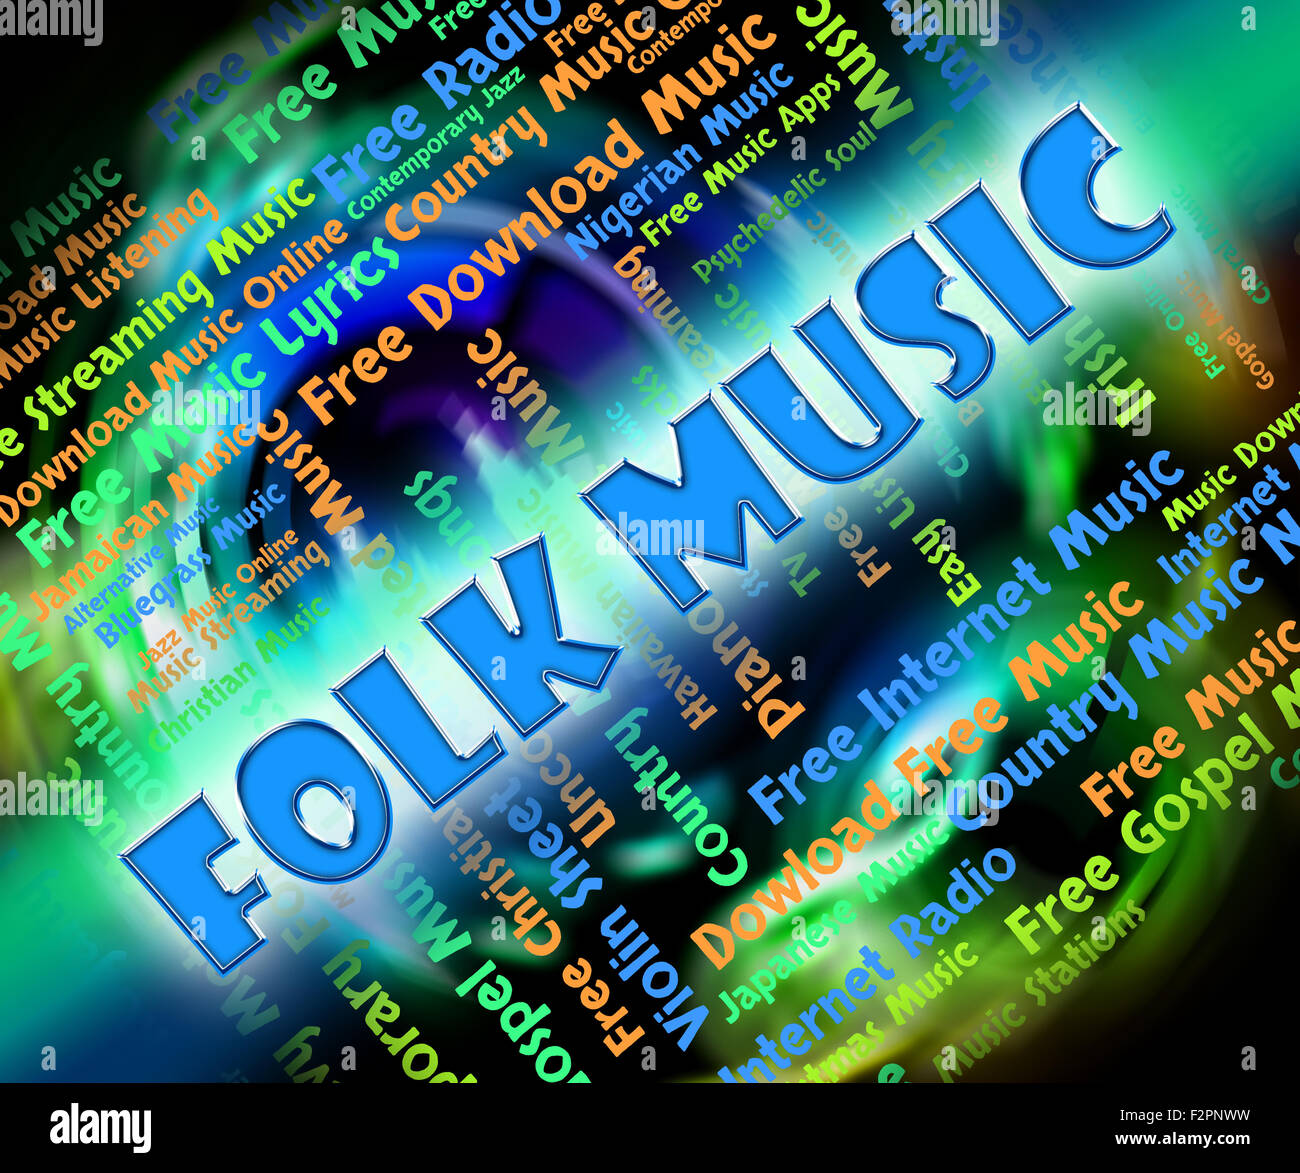 Folk Music Representing Sound Tracks And Balladry Stock Photo